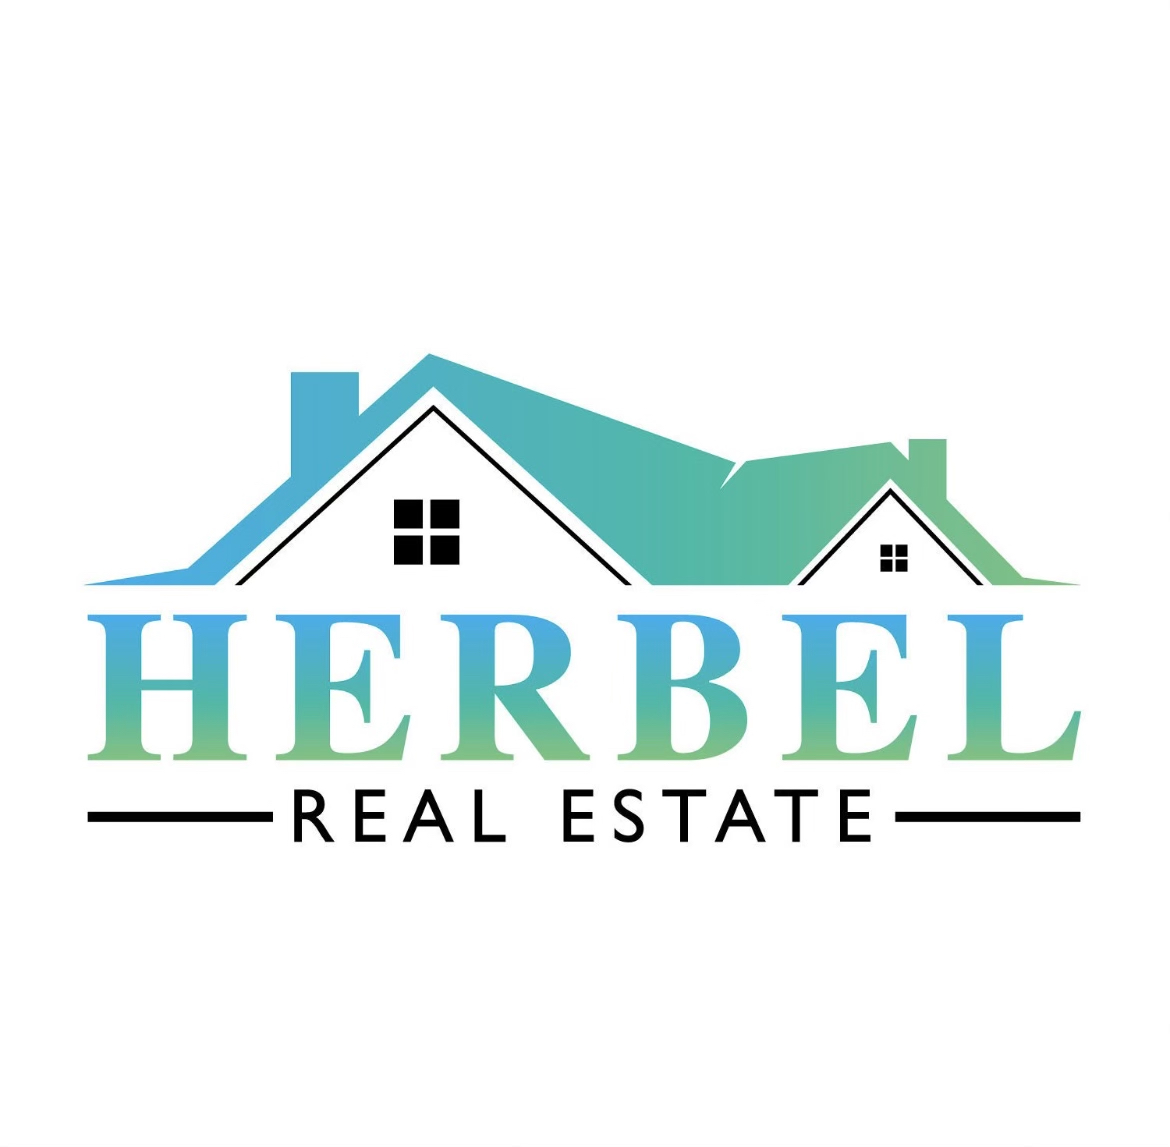 Herbel Real Estate LLC